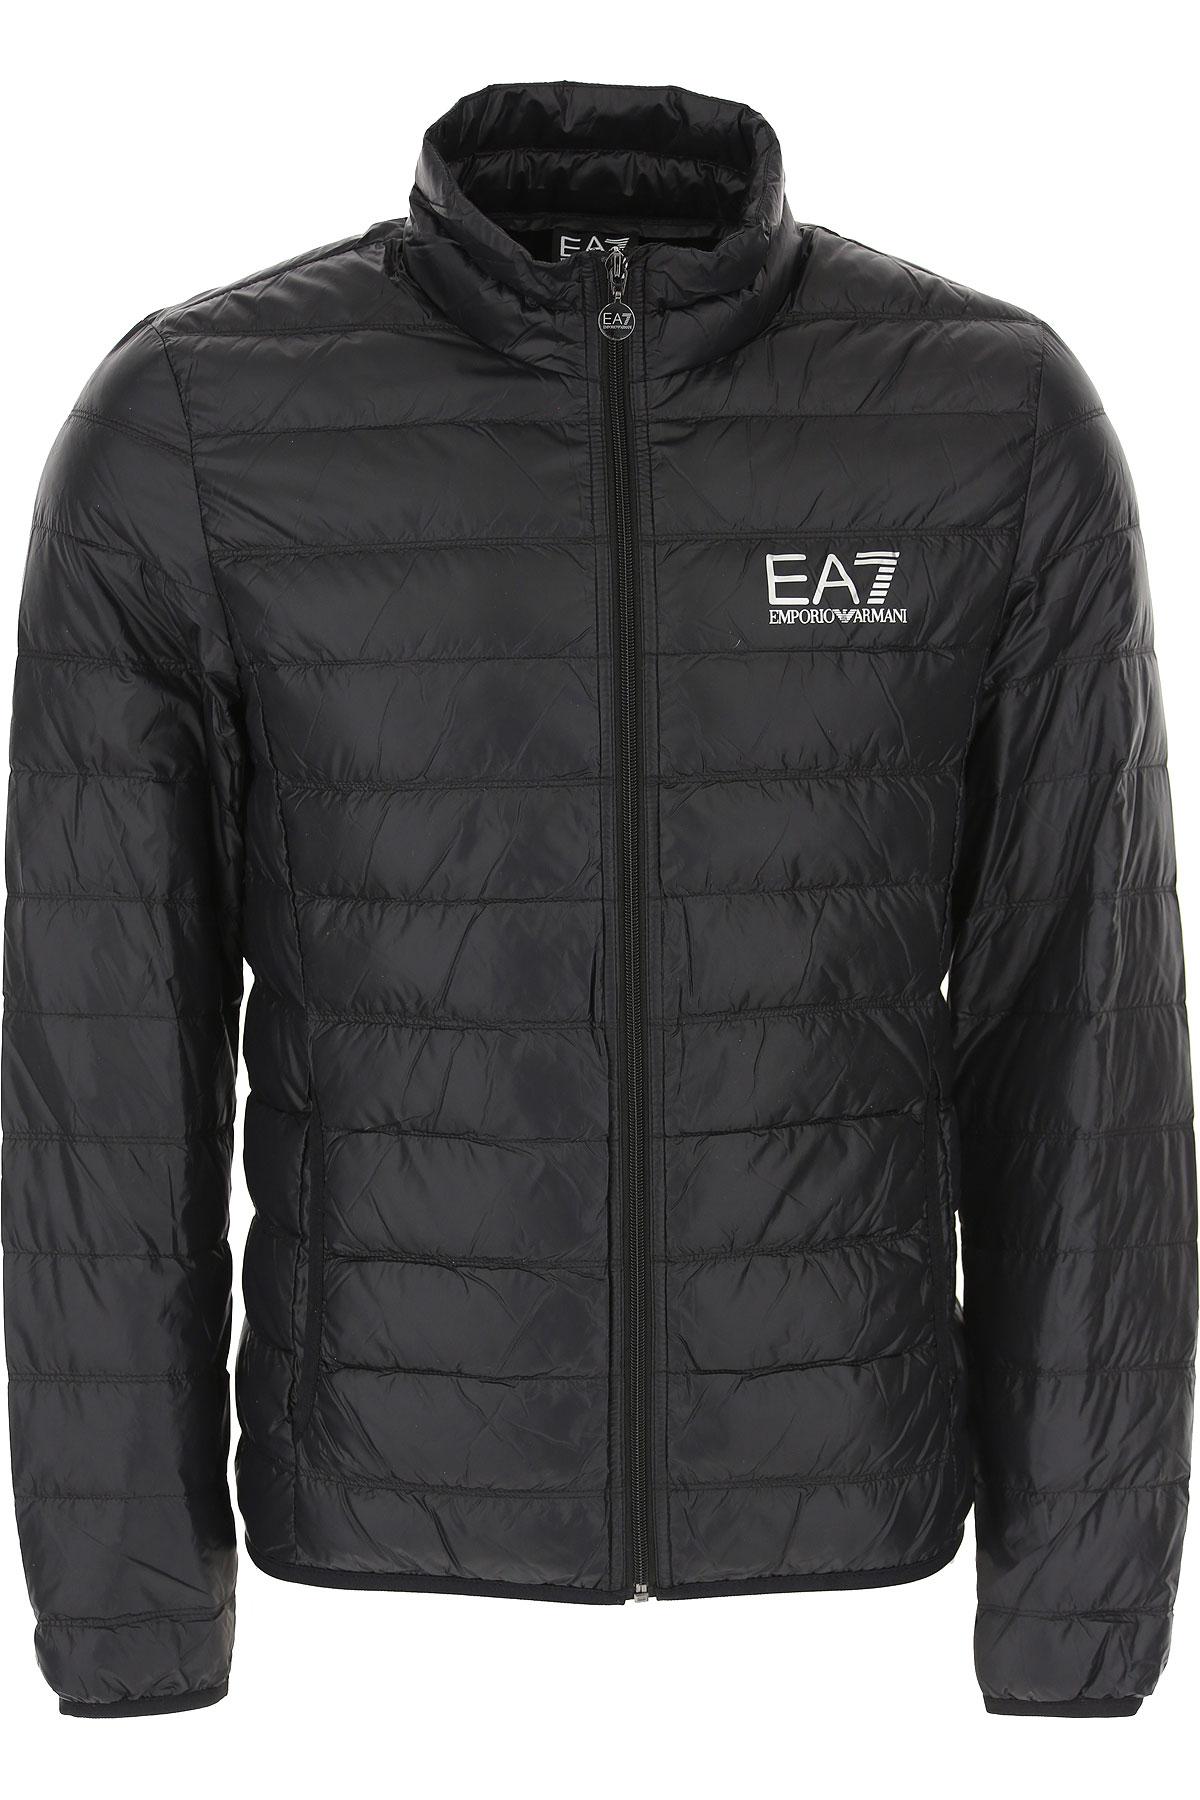 Emporio Armani Down Jacket For Men in Black for Men - Lyst